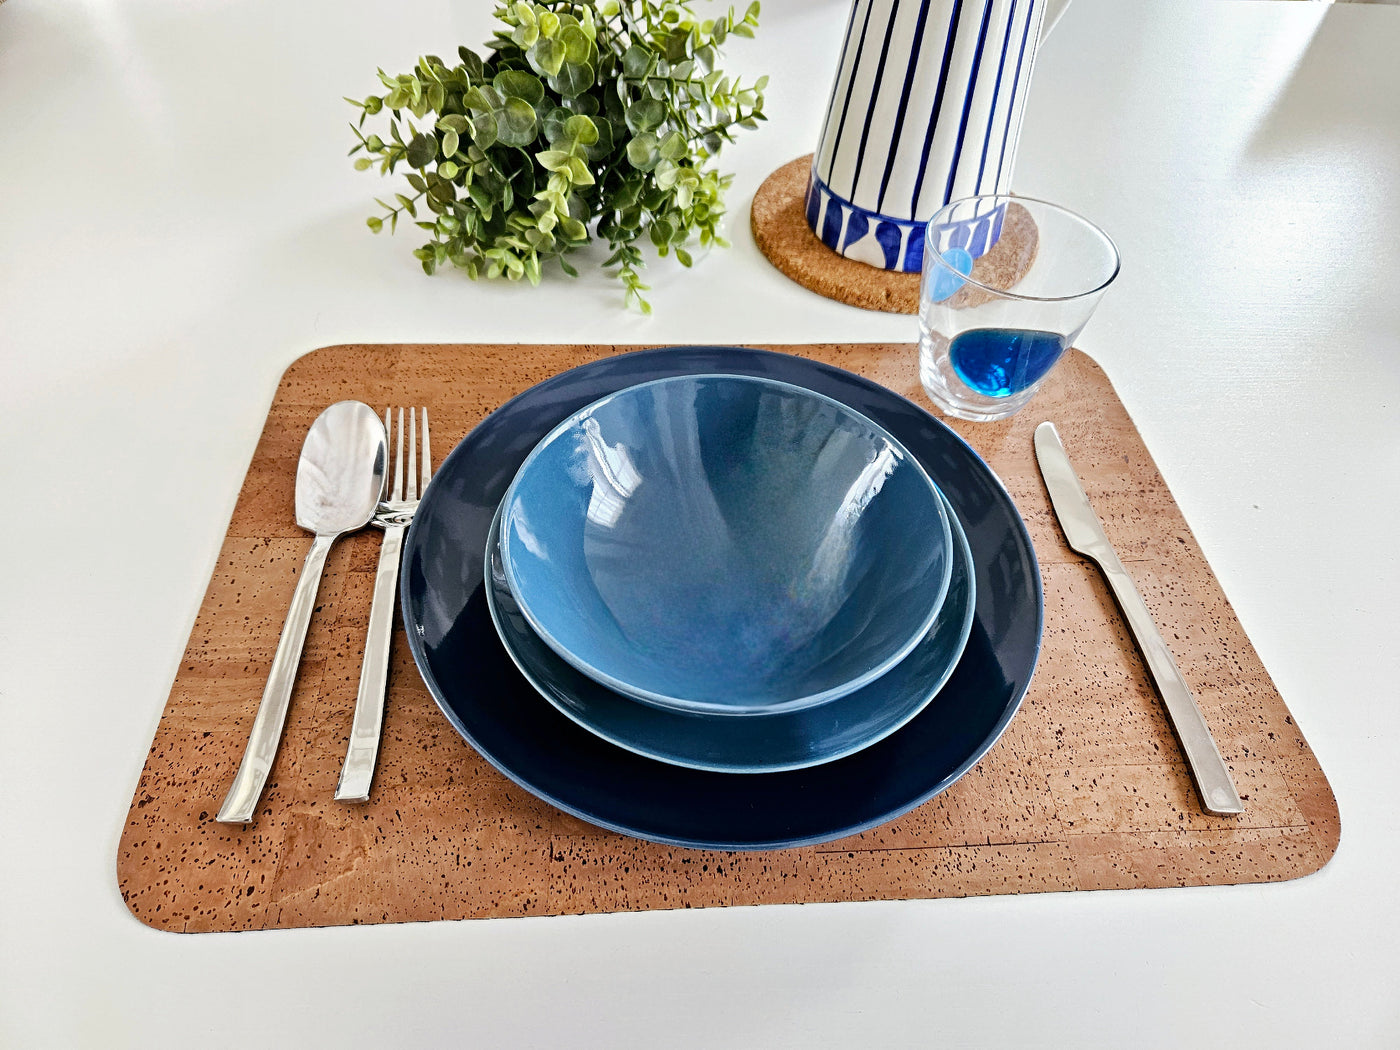 CORK Placemat TURQUOISE BLUE Nonslip Individual Eco Friendly Heat Resistant Waterproof Rectangular Dining Table Dinner Decor Vegan Kitchen